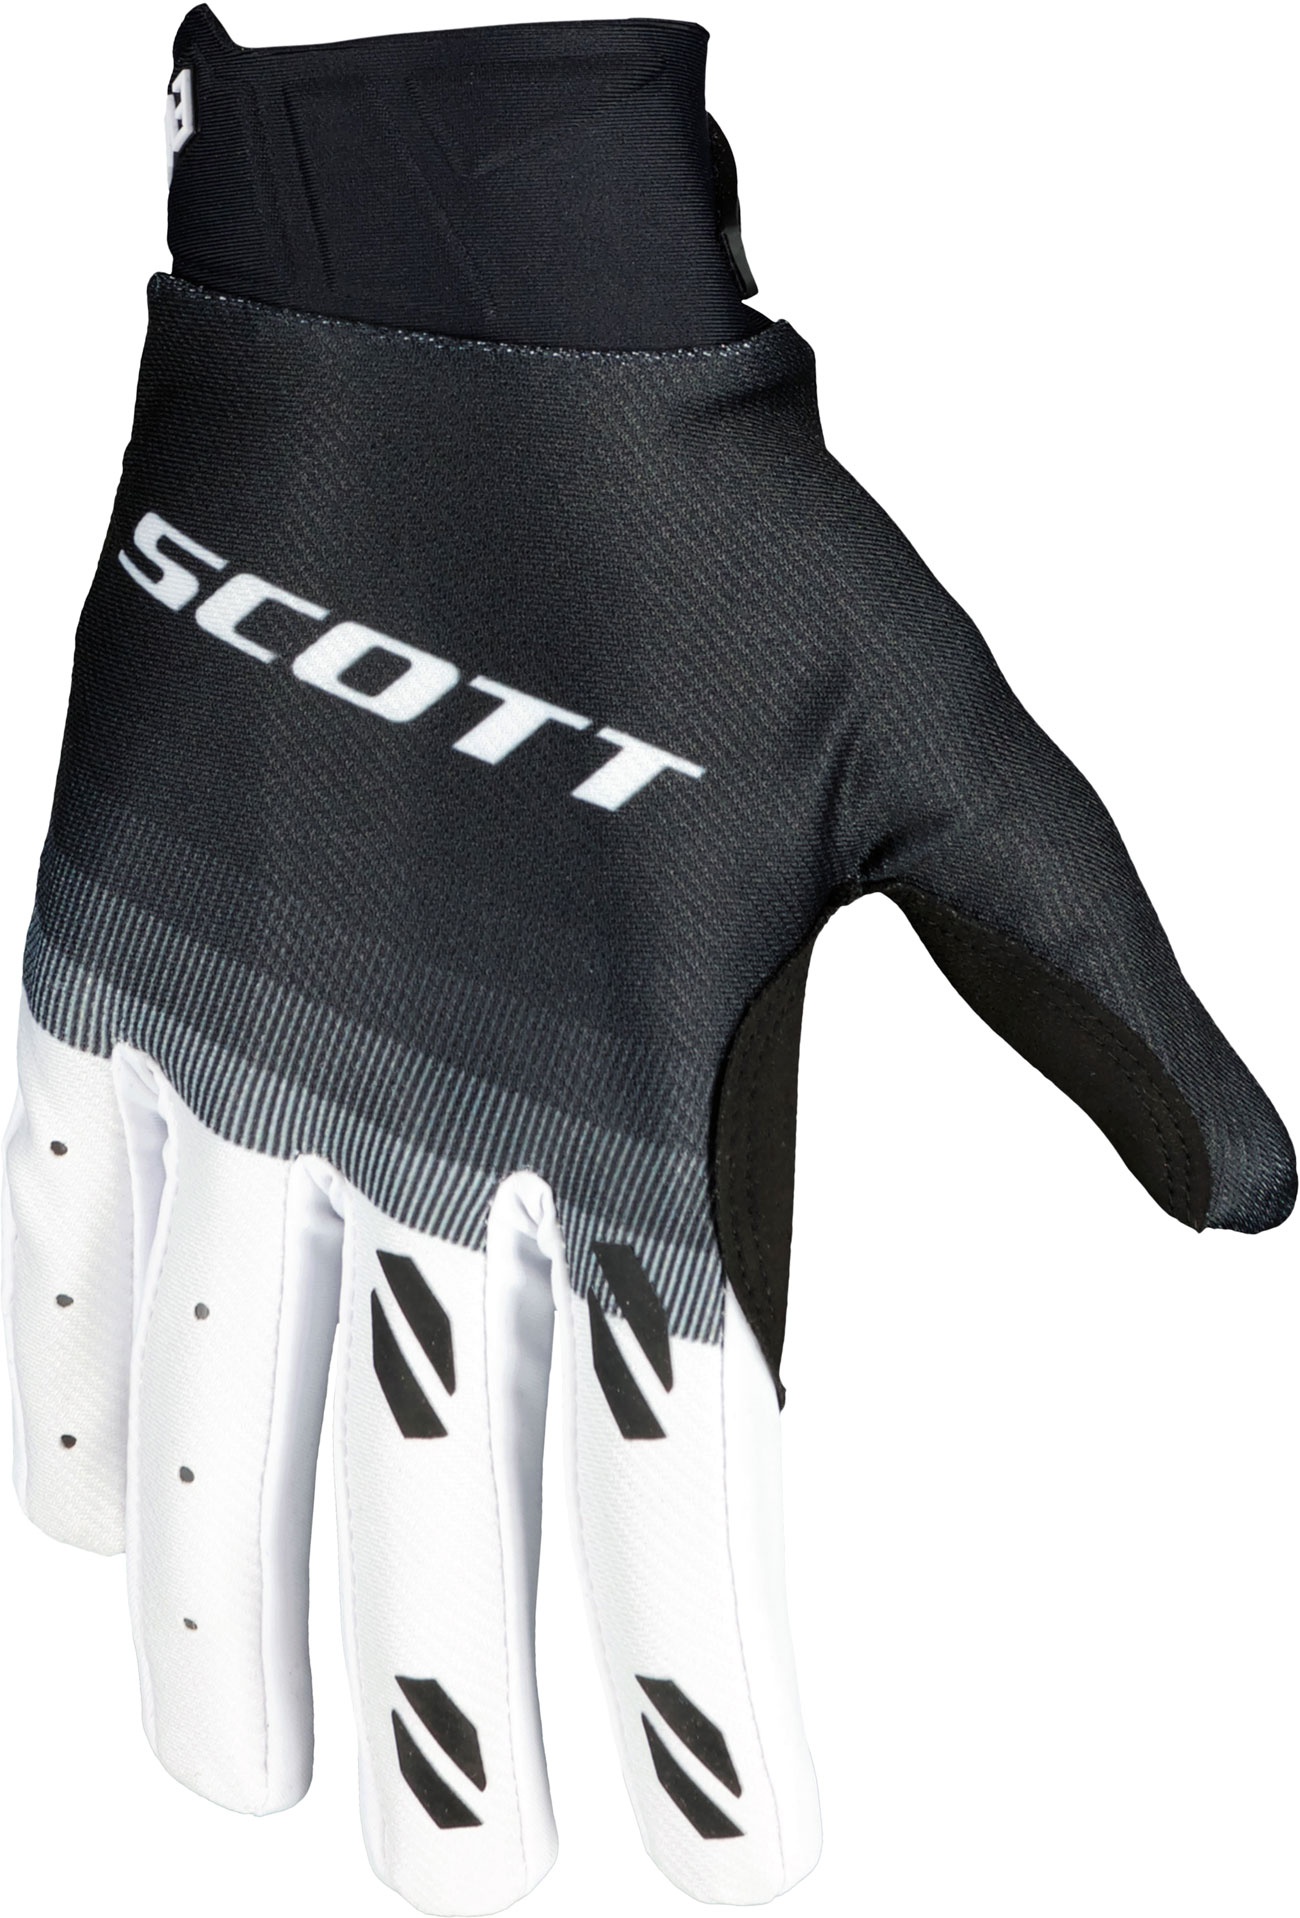 Scott Evo Fury S24, gants - Noir/Blanc - XL